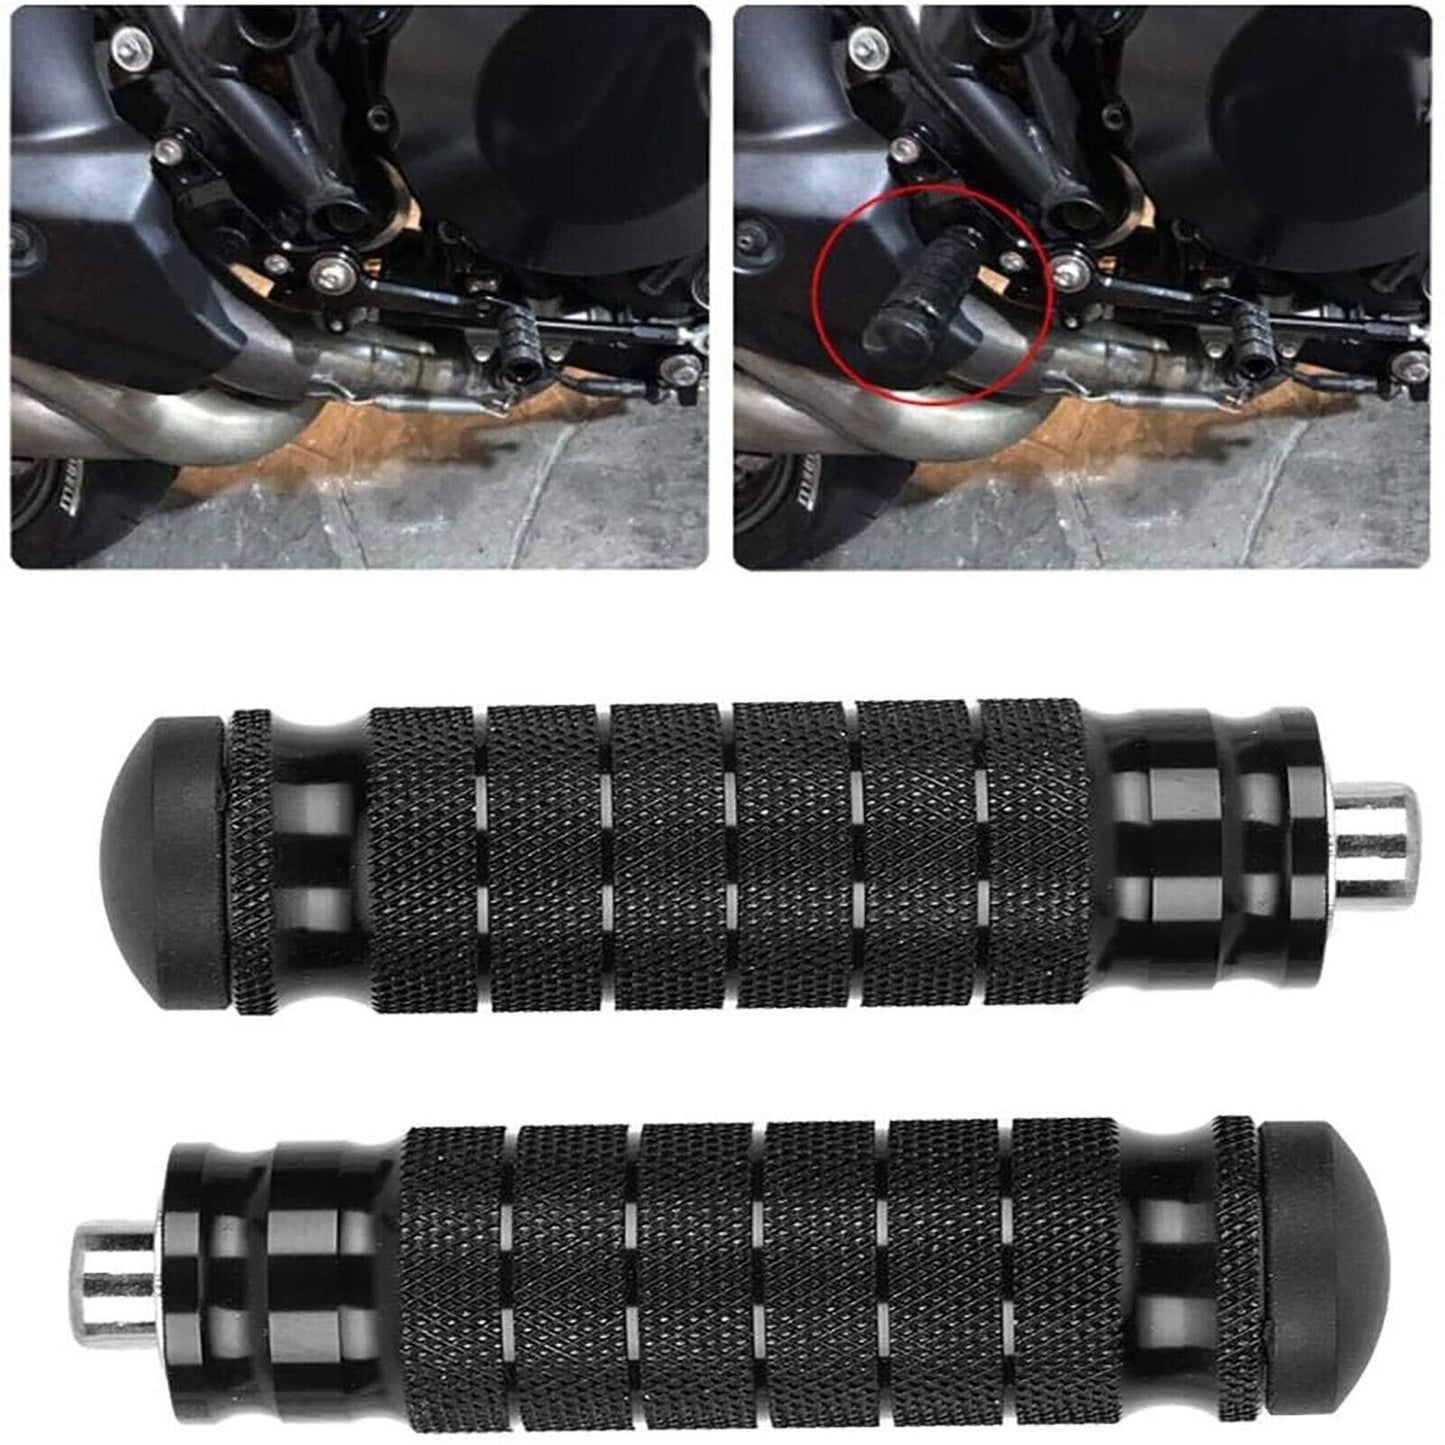 Pair CNC Universal 8MM/M8 Motorcycle Foot Pegs Footpegs Rearset Foot Rest Pedals